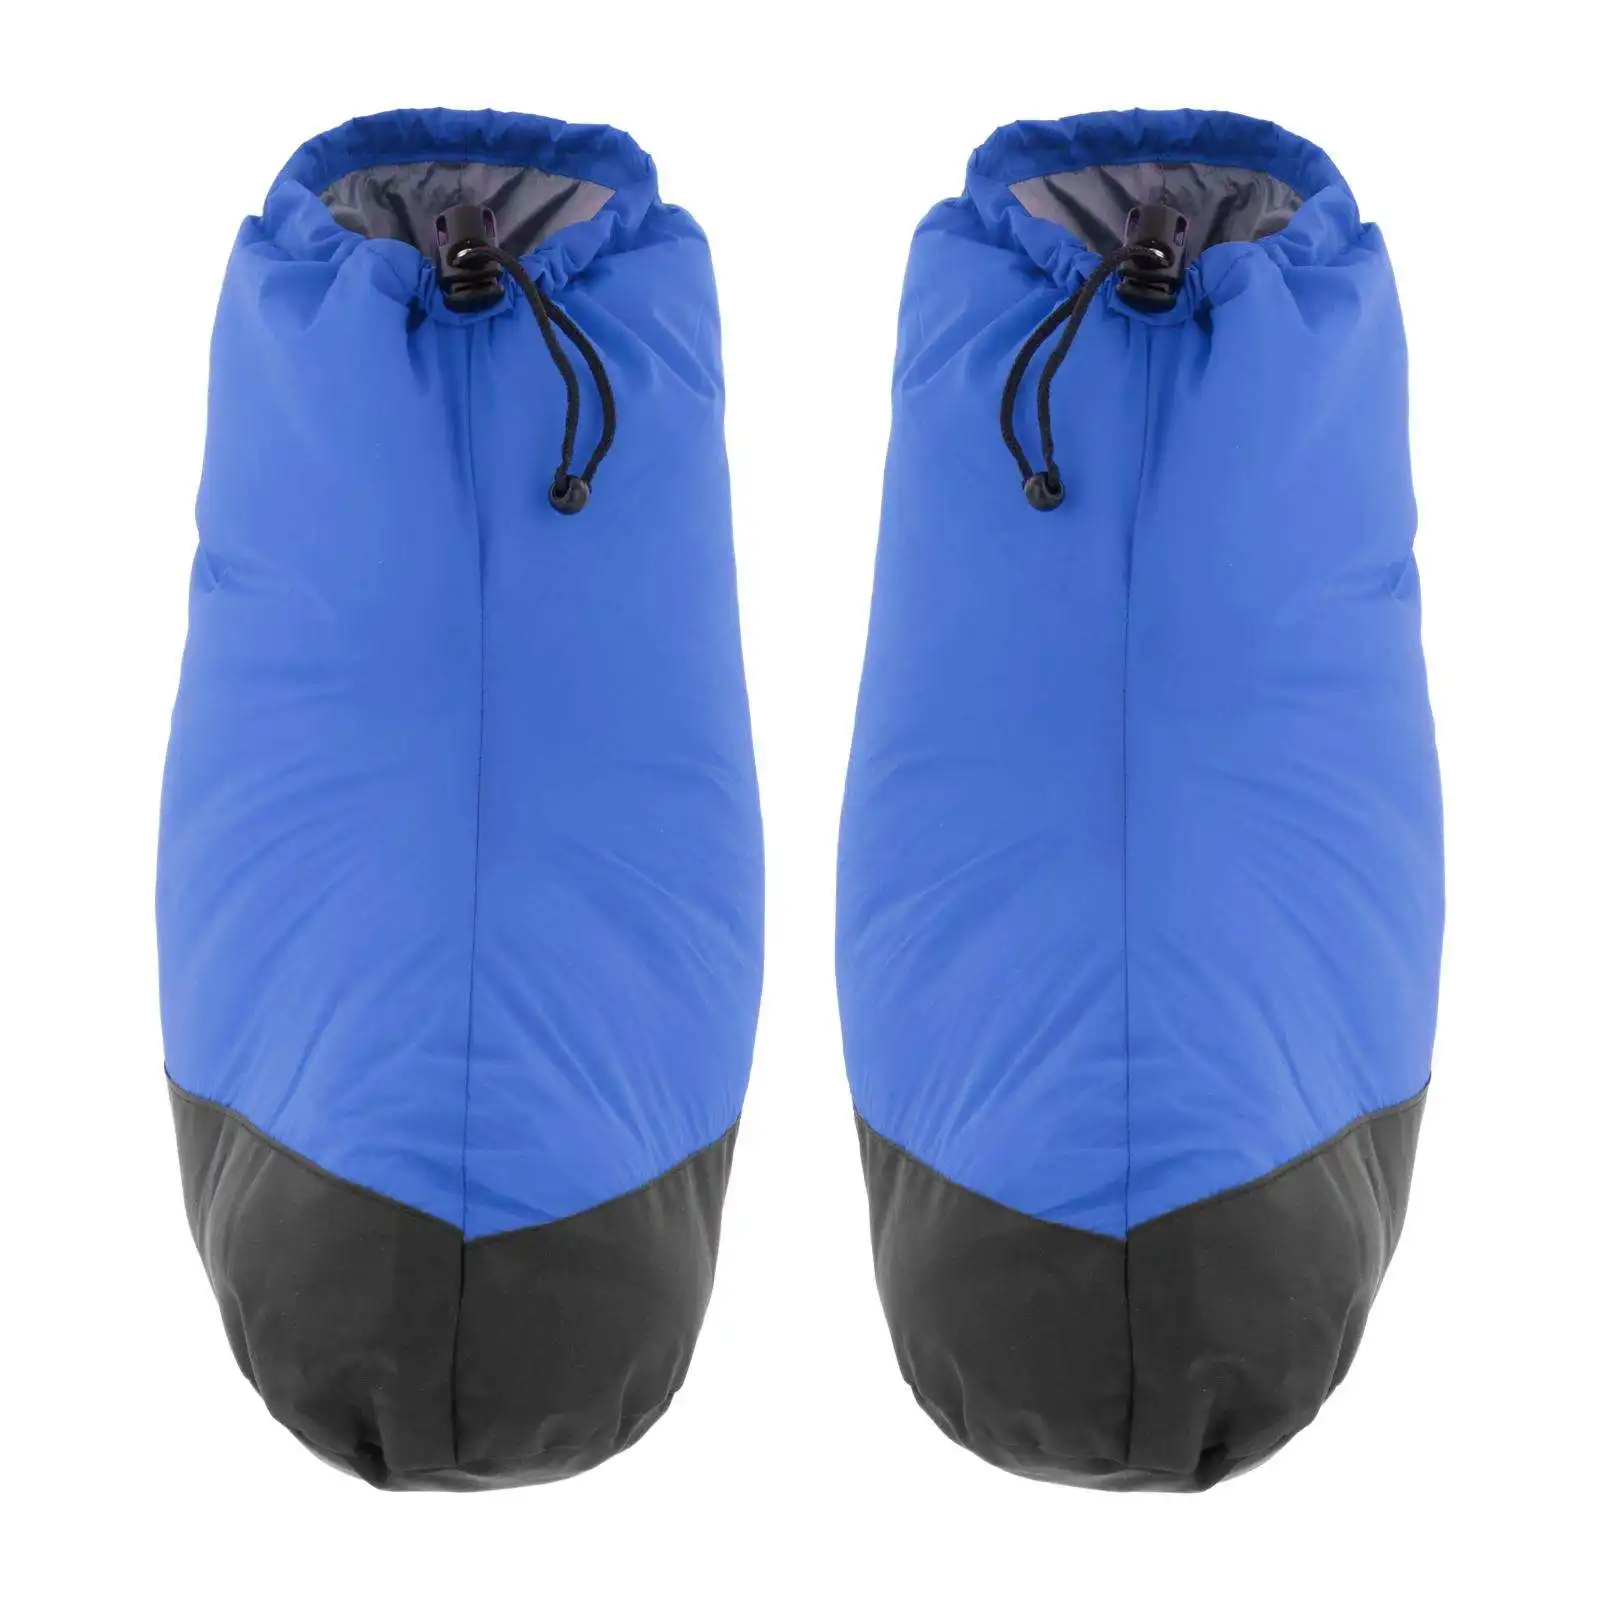 Duck Down Booties Sleeping Bag Accessories Duck Down Slippers Ultralight Camping Outdoor Soft Sock Unisex Indoor Warm Boots